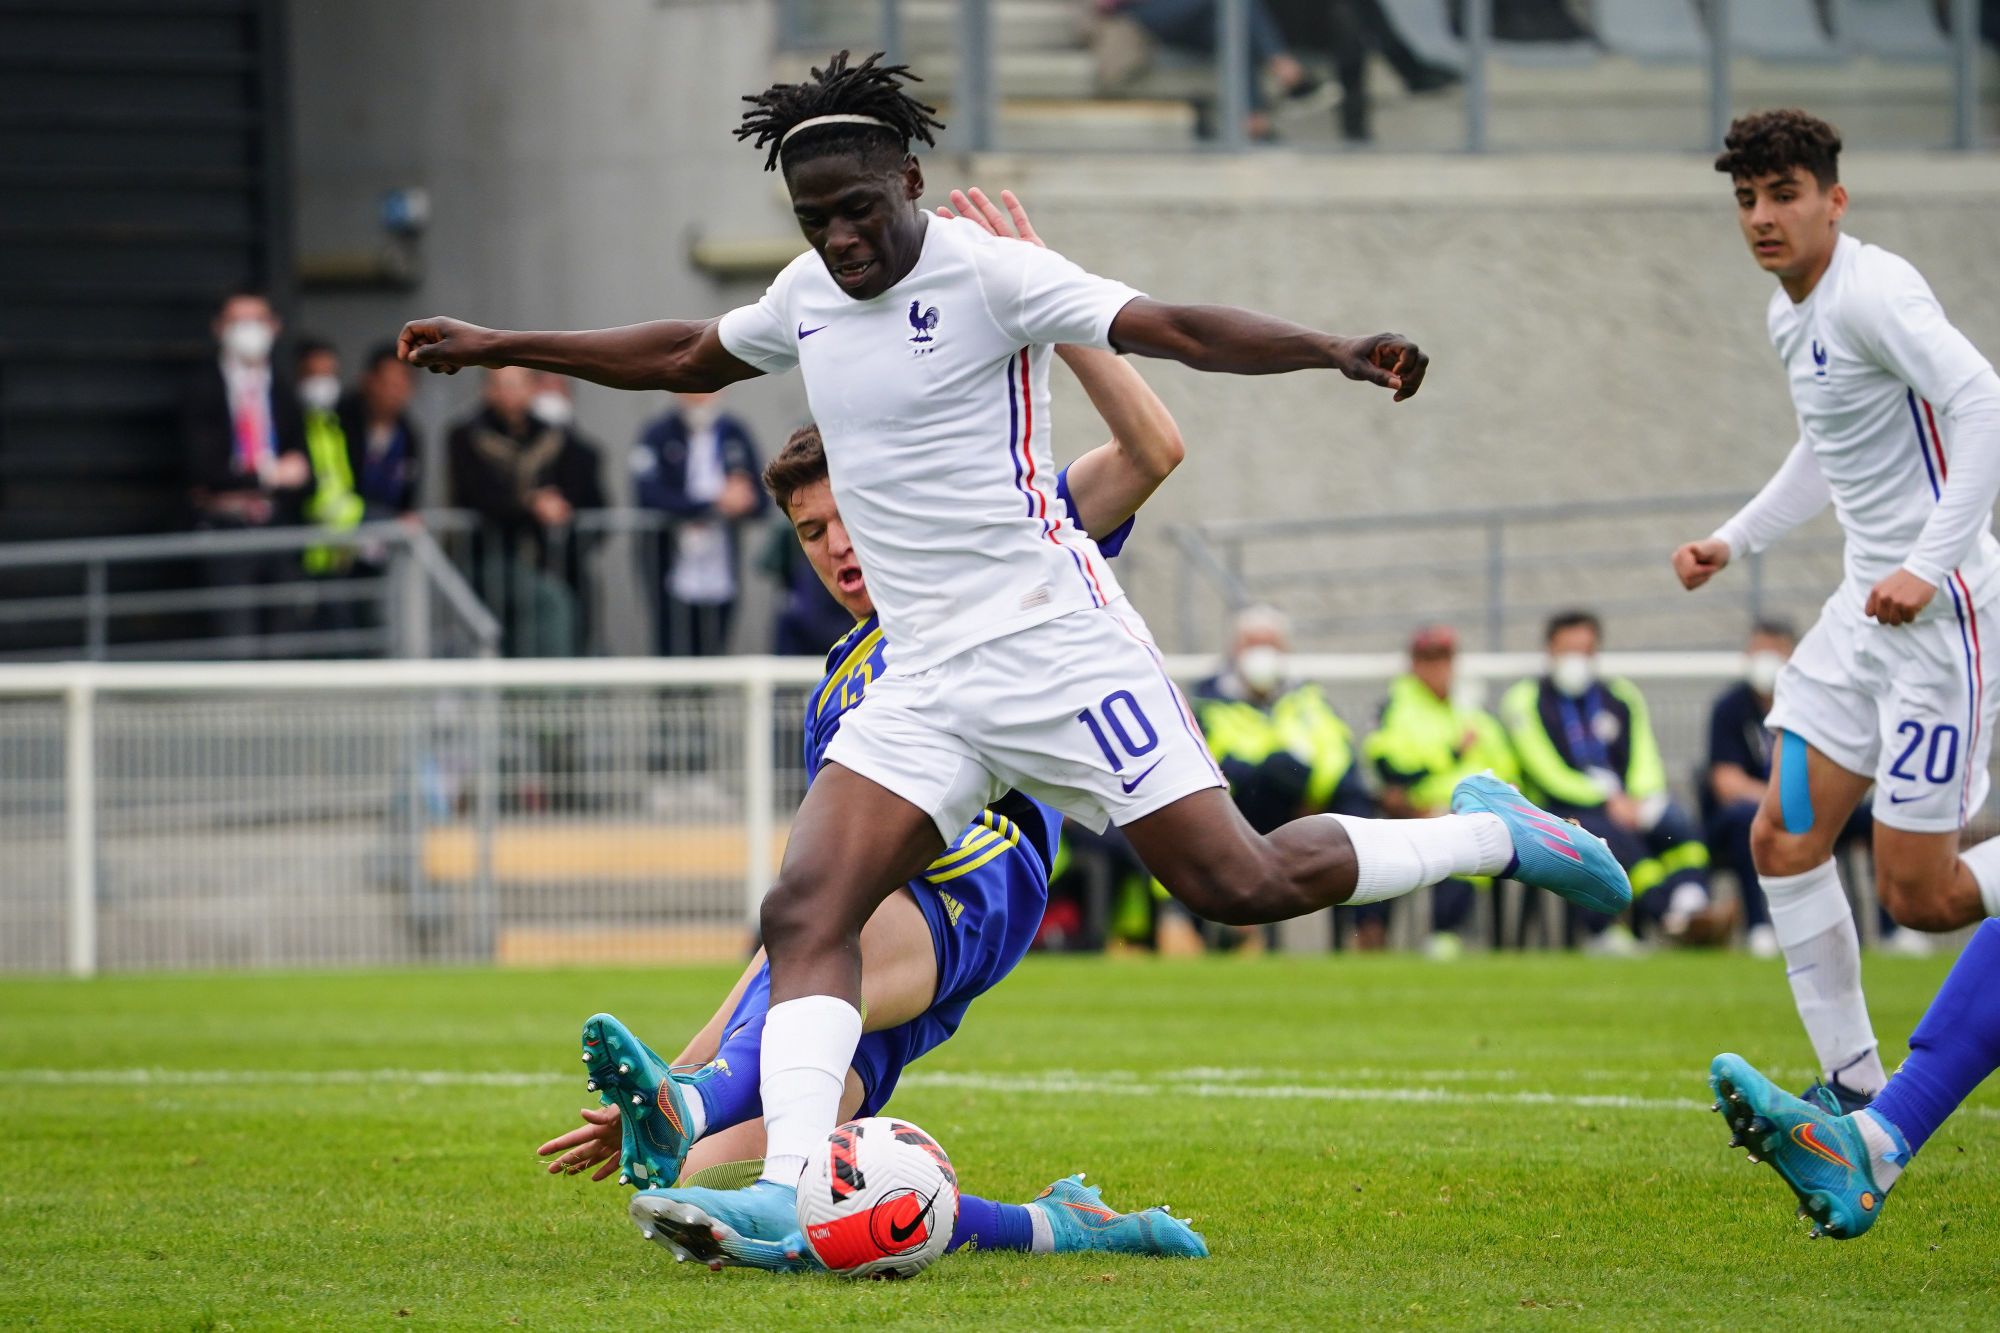 Франция U19 — Израиль U19 прогноз 28 июня 2022: ставки и коэффициенты на матч Евро U19